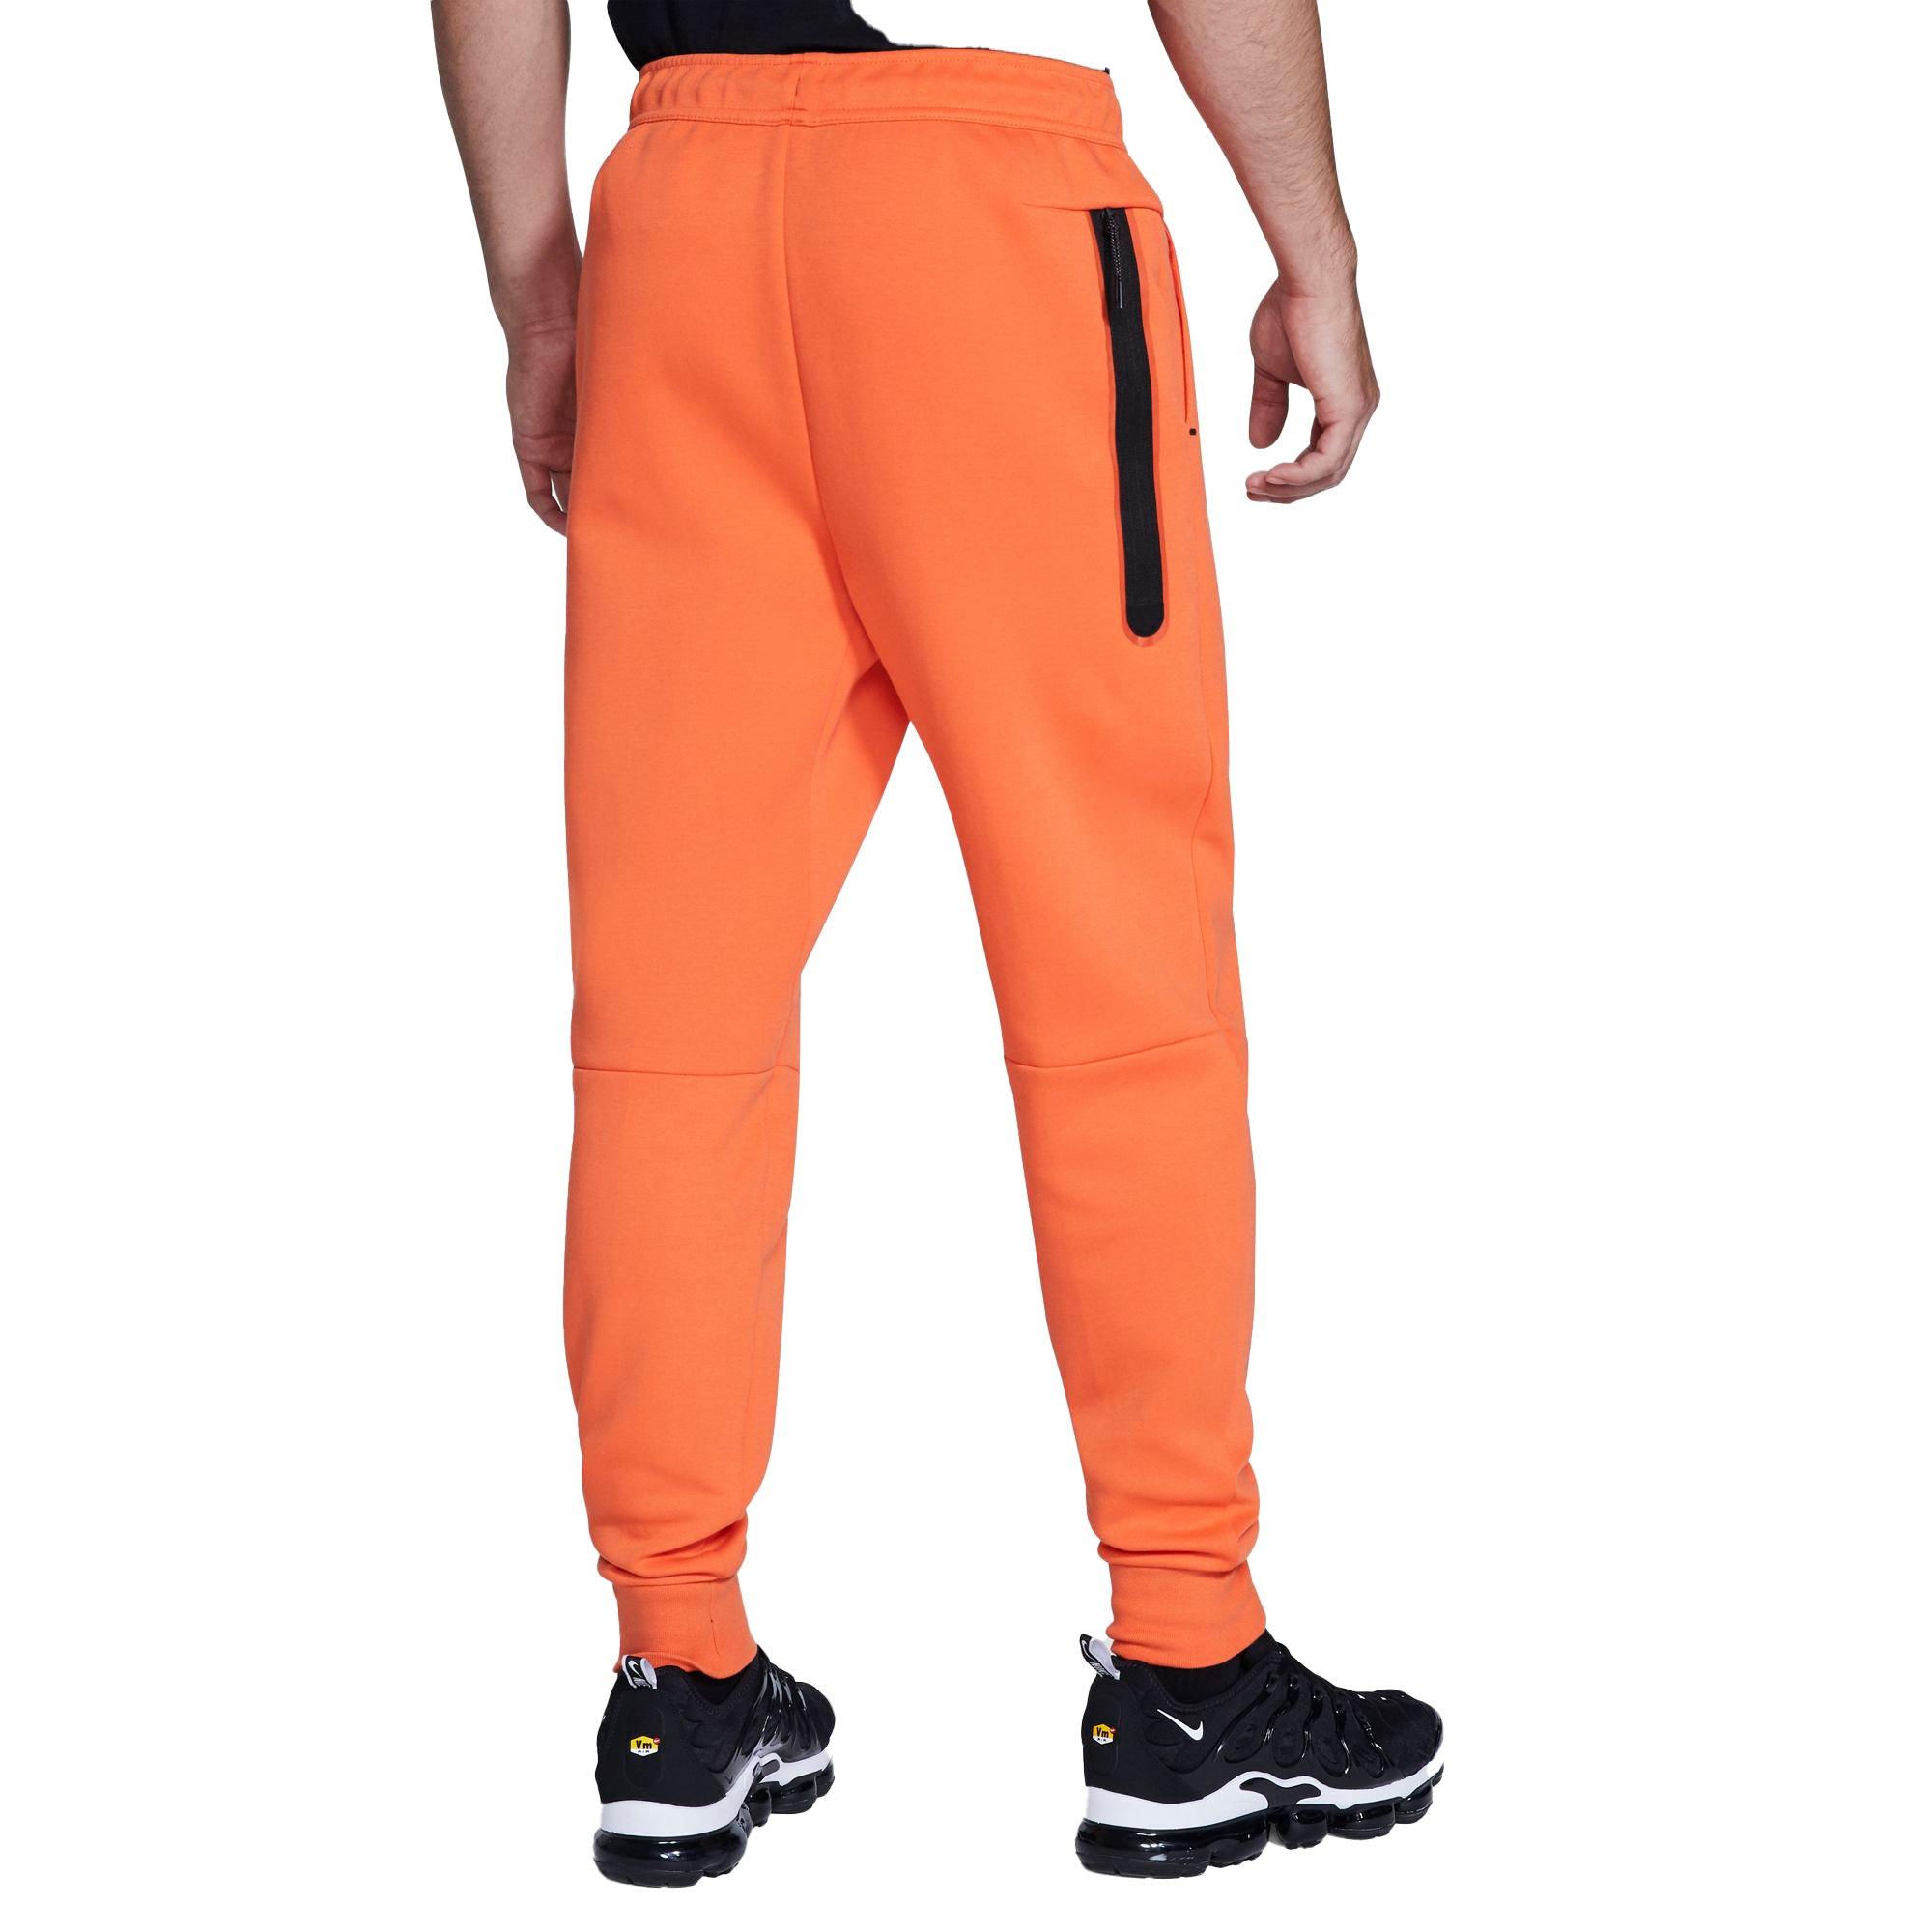 nike tech fleece pants orange